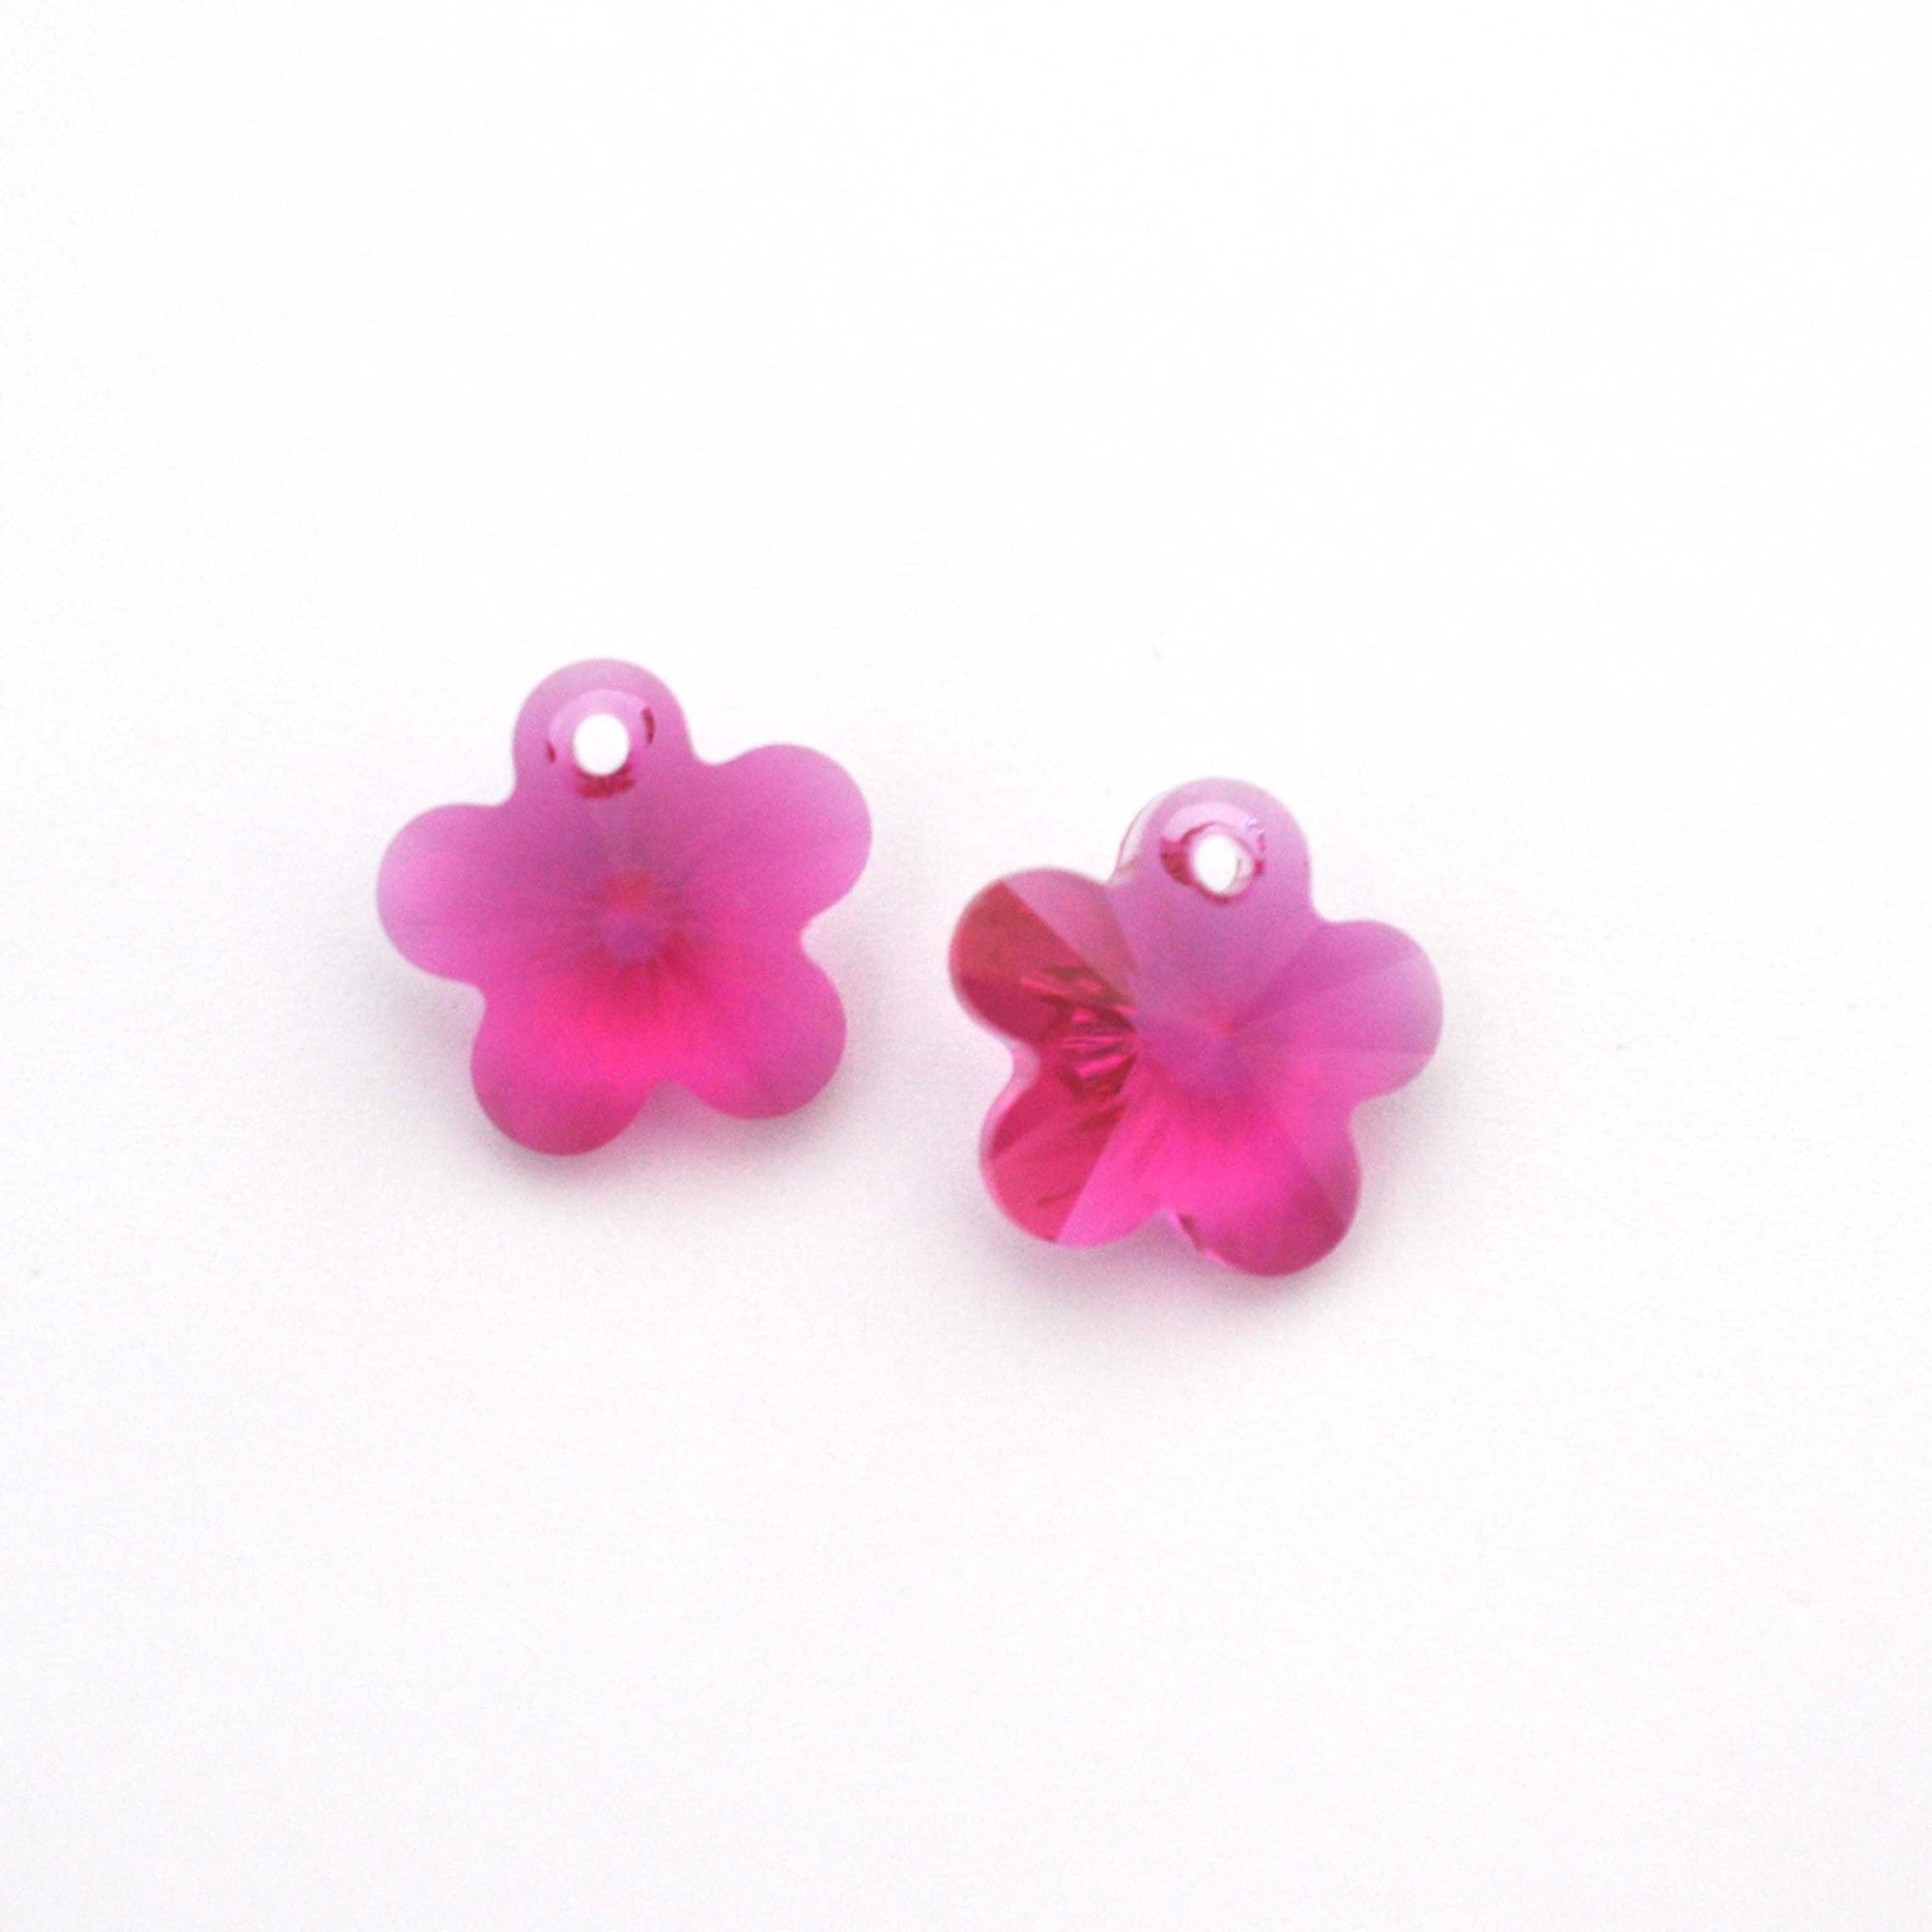 Fuchsia Pink Flower Pendant 6744 Barton Crystal 14mm - 1 Pair (2 Pieces)